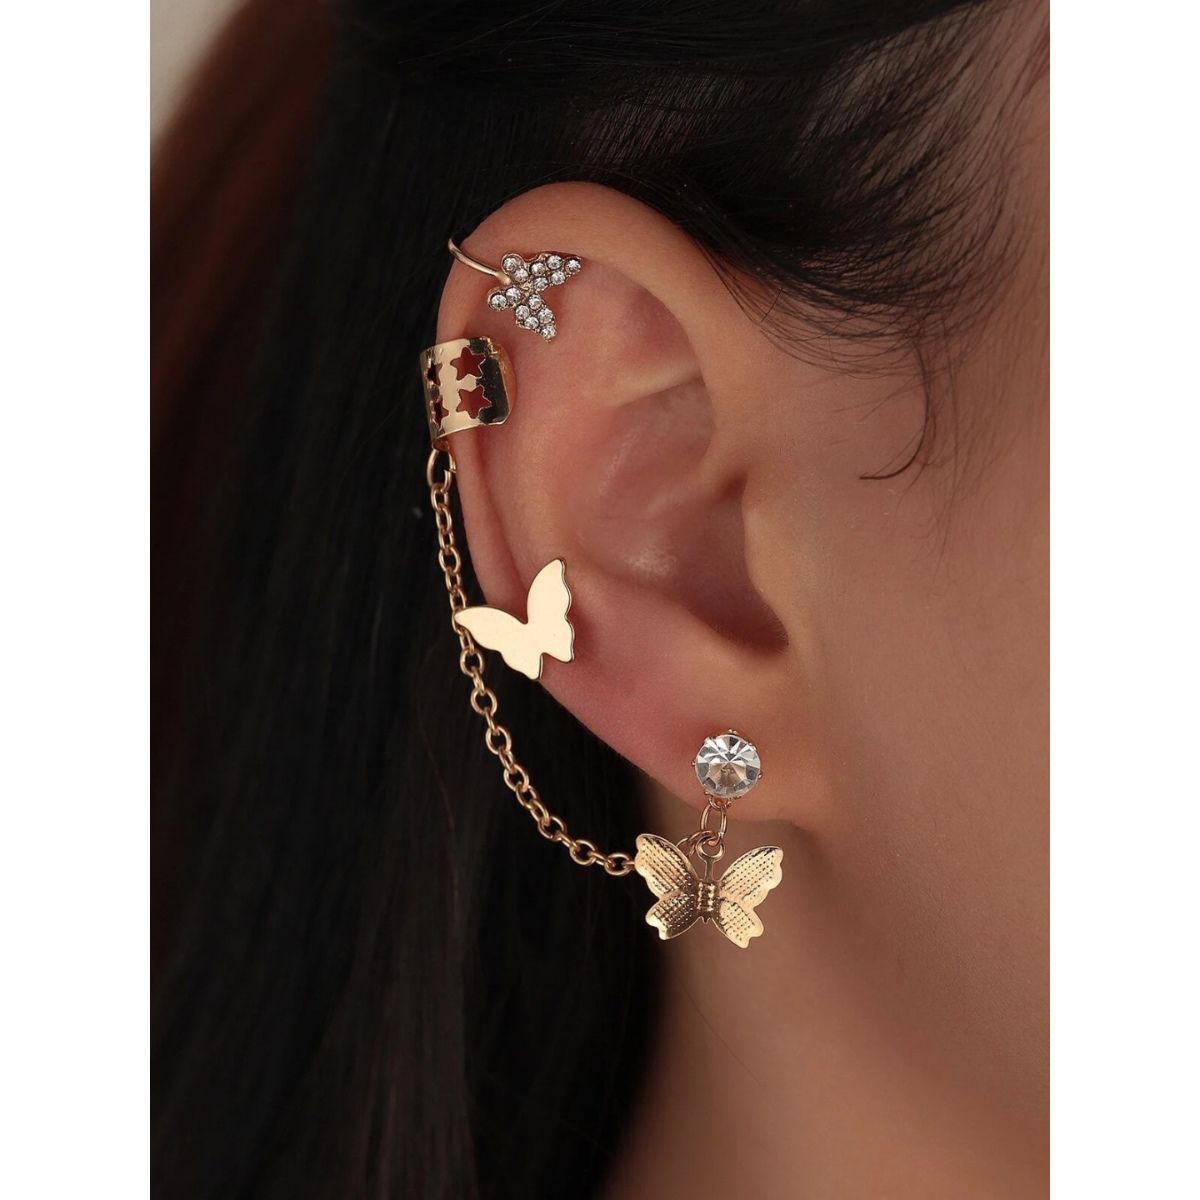 ToniQ Stylish Set of 4 Gold Plated Star  Moon Ear Cuff for Women